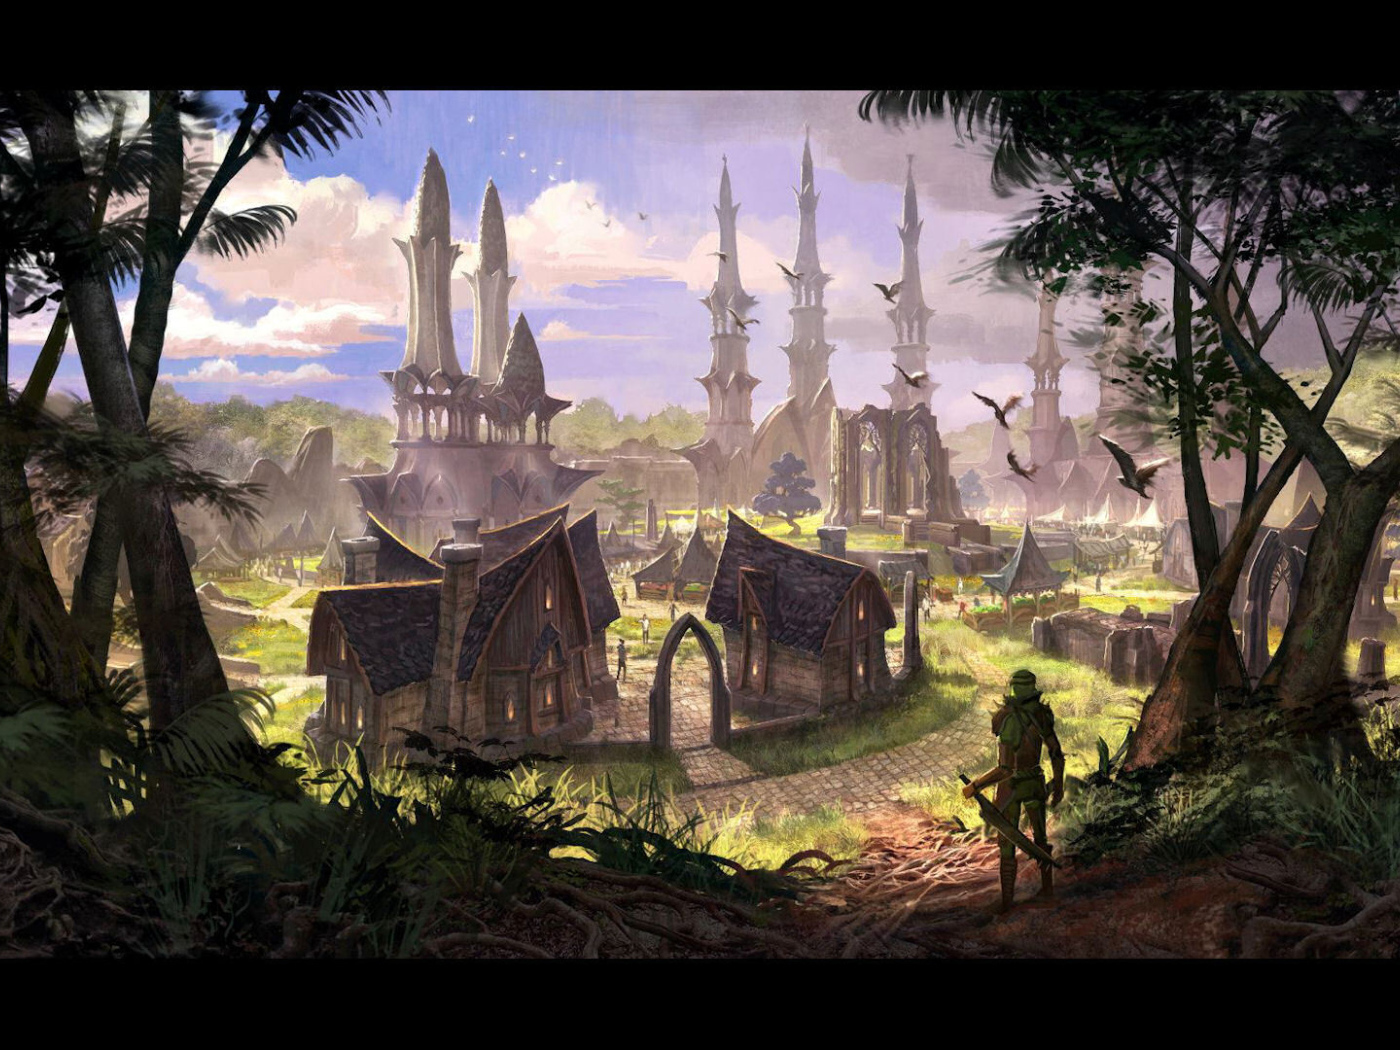 Elder Scrolls Online: the elf kingdom